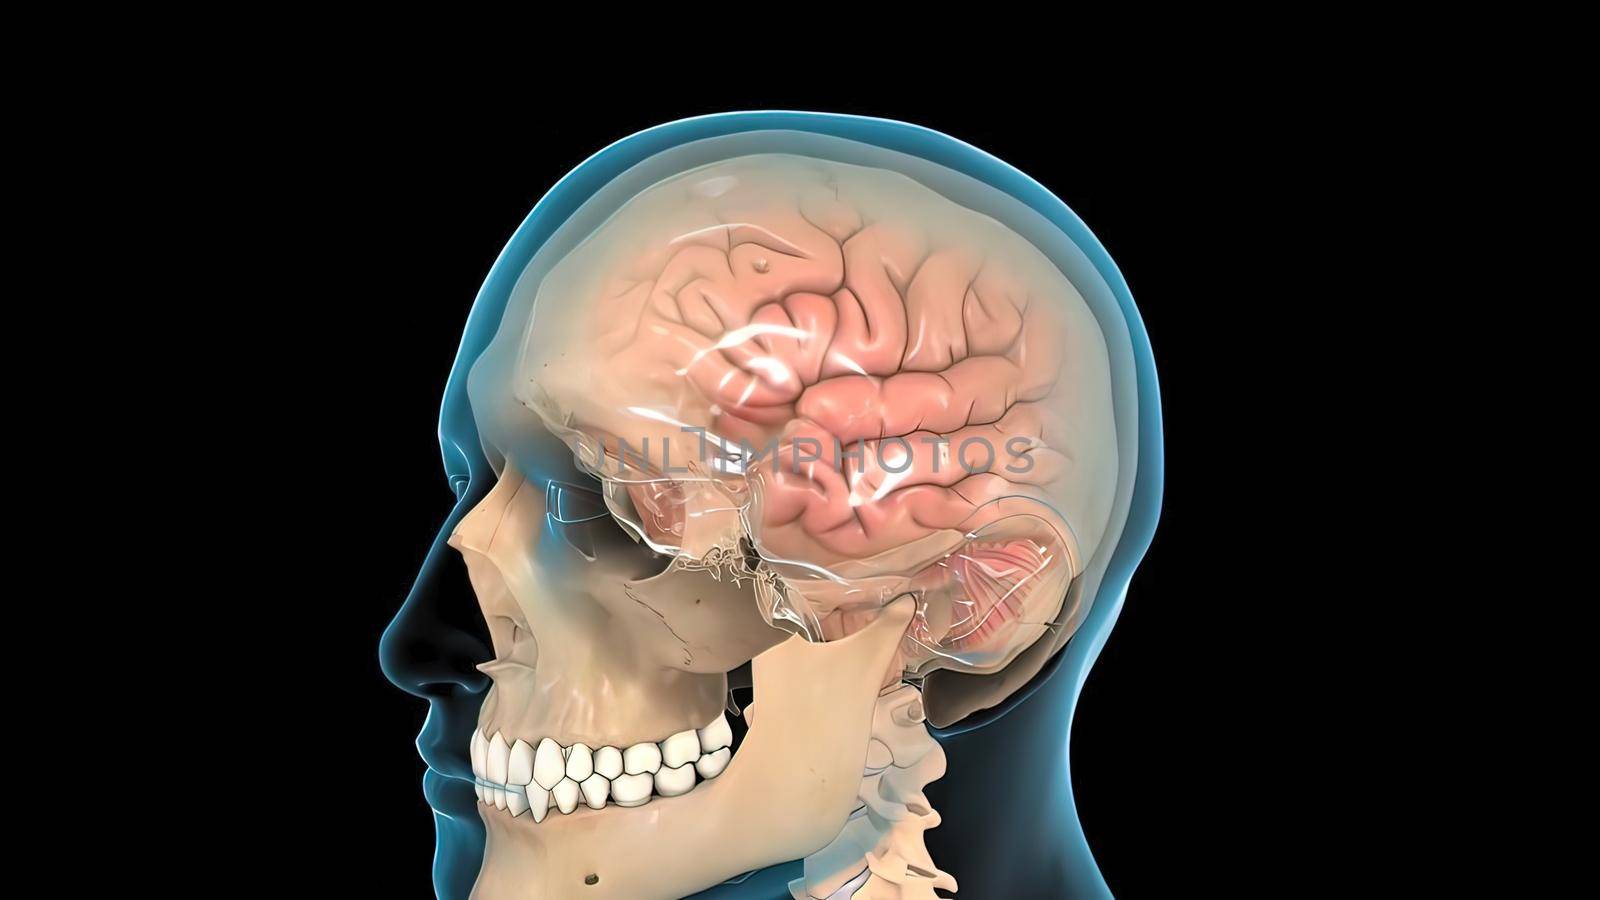 Male medical brain scan in cycle (temporal lobe, parietal lobe) by creativepic